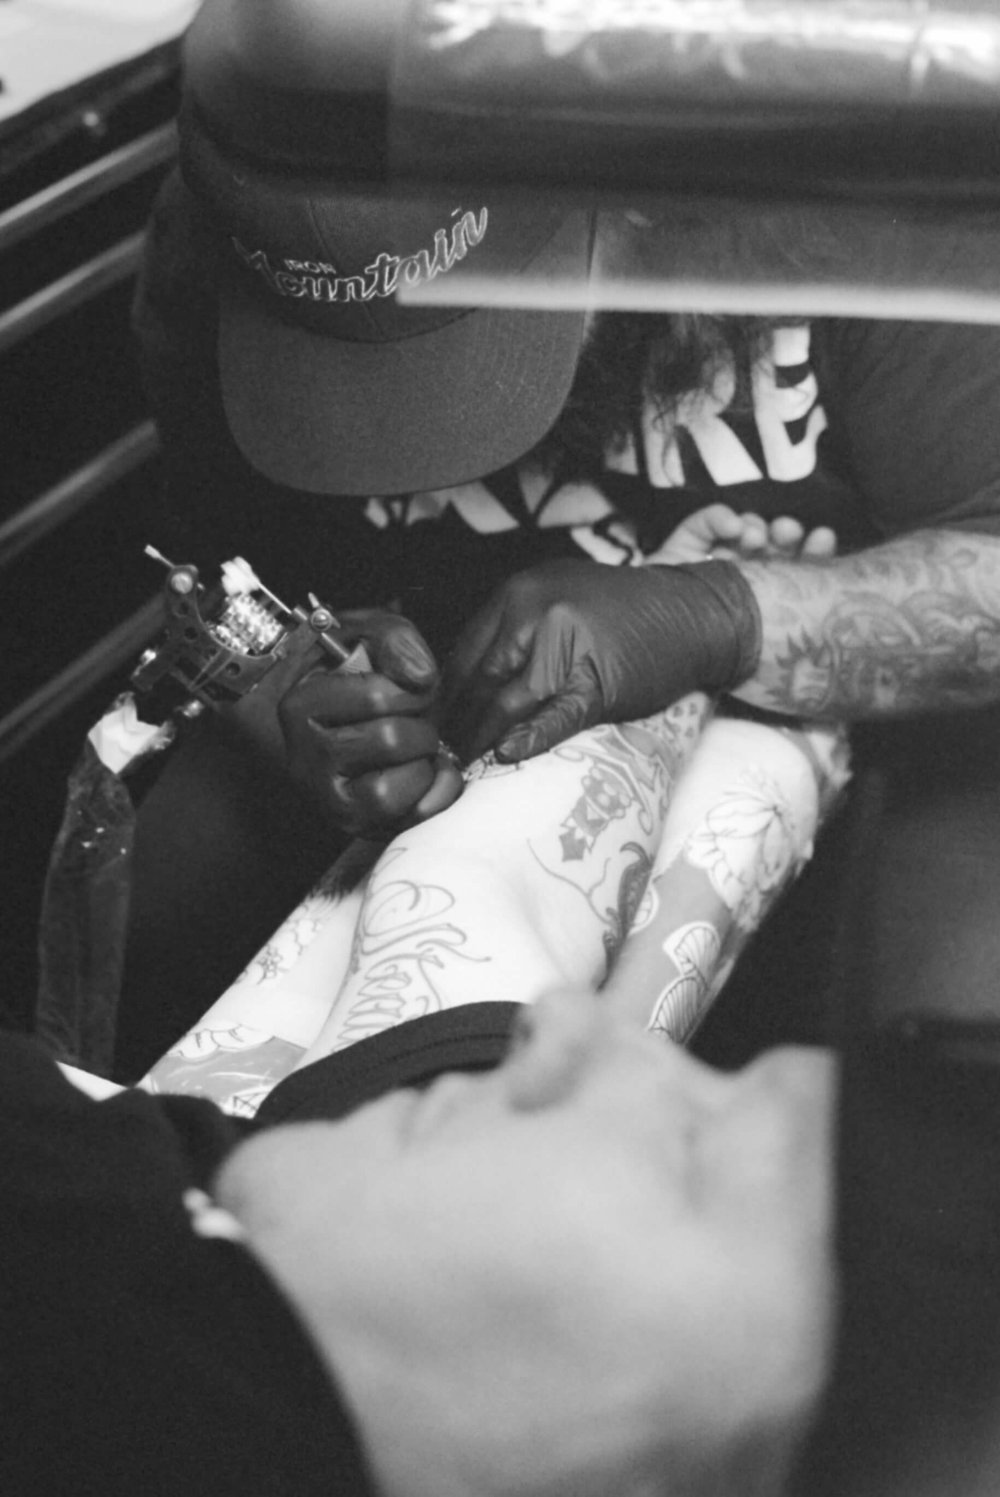 Chris Vanderschaaf getting tattooed by Luke Holland, Lombard St. Tattoo in Portland, Or, 2019